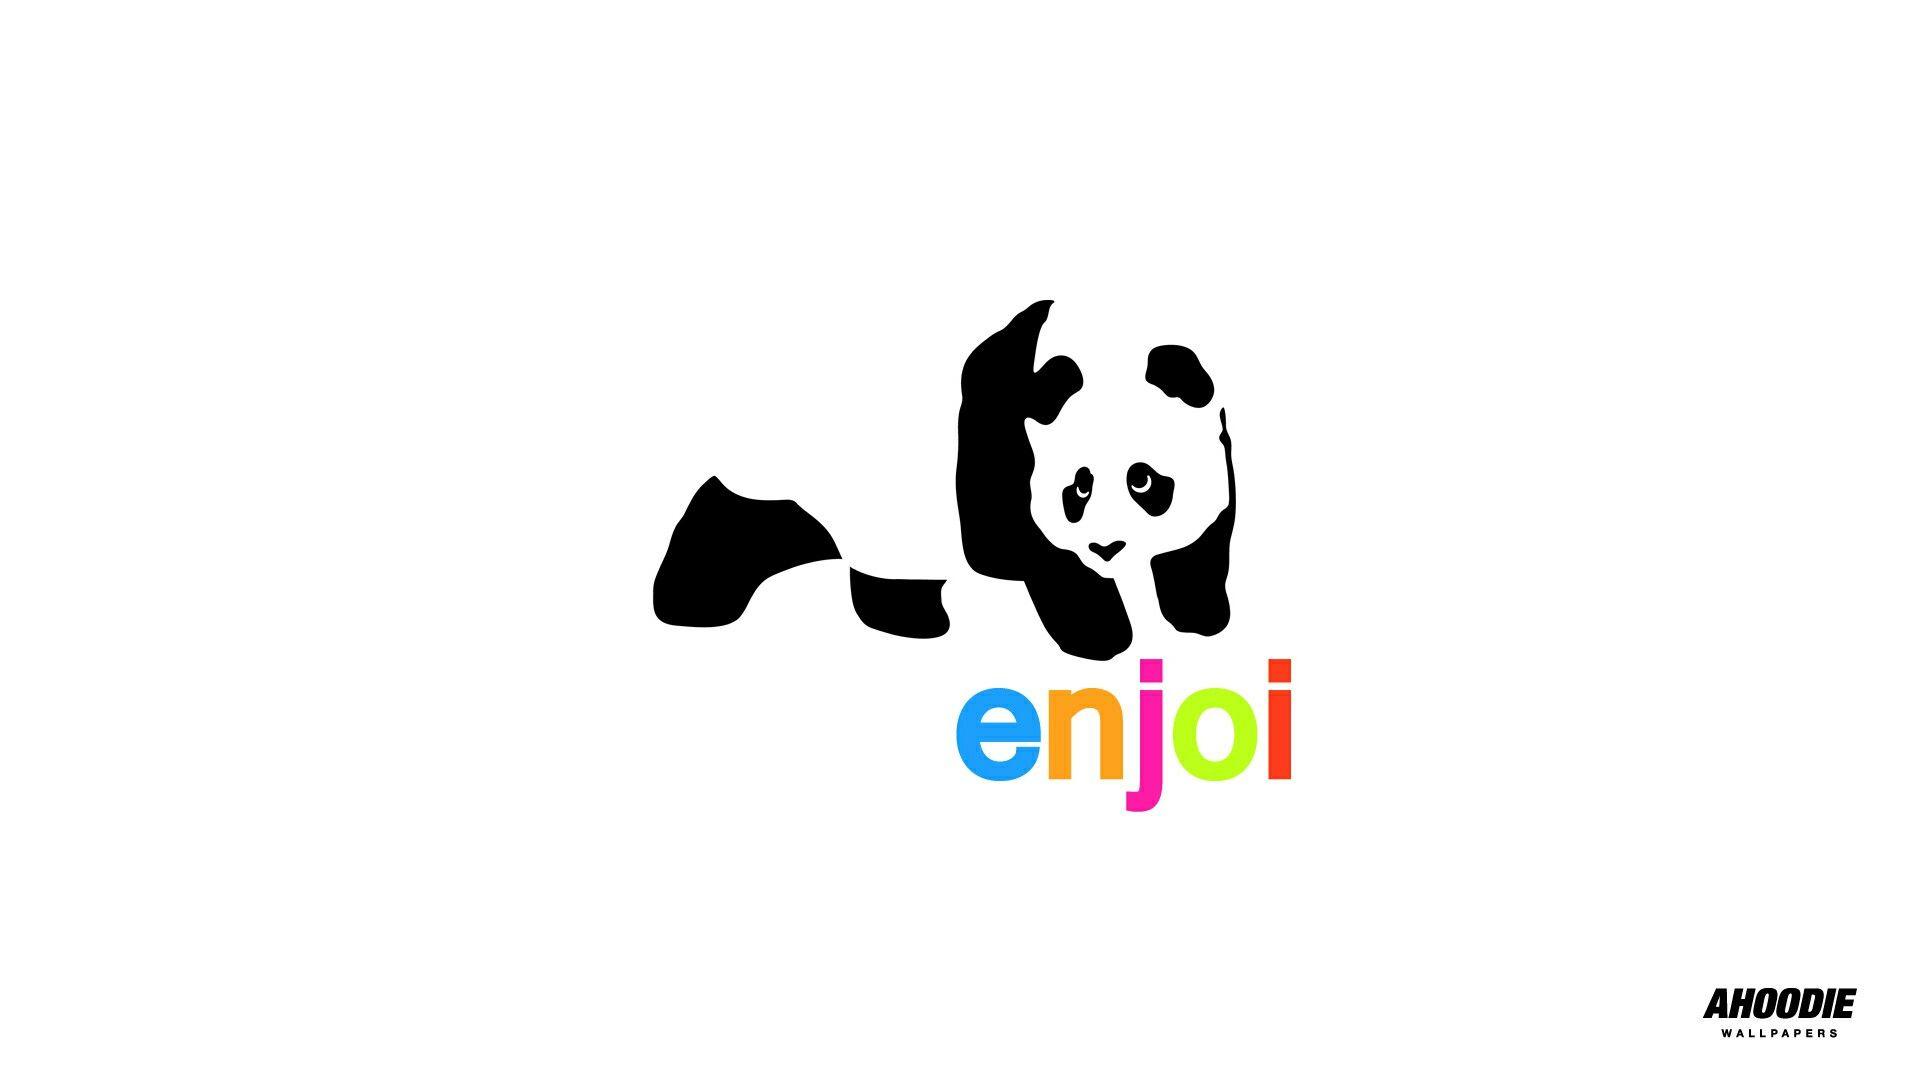 Enjoi®™. Wallpaper, Skateboard logo, Industry logo